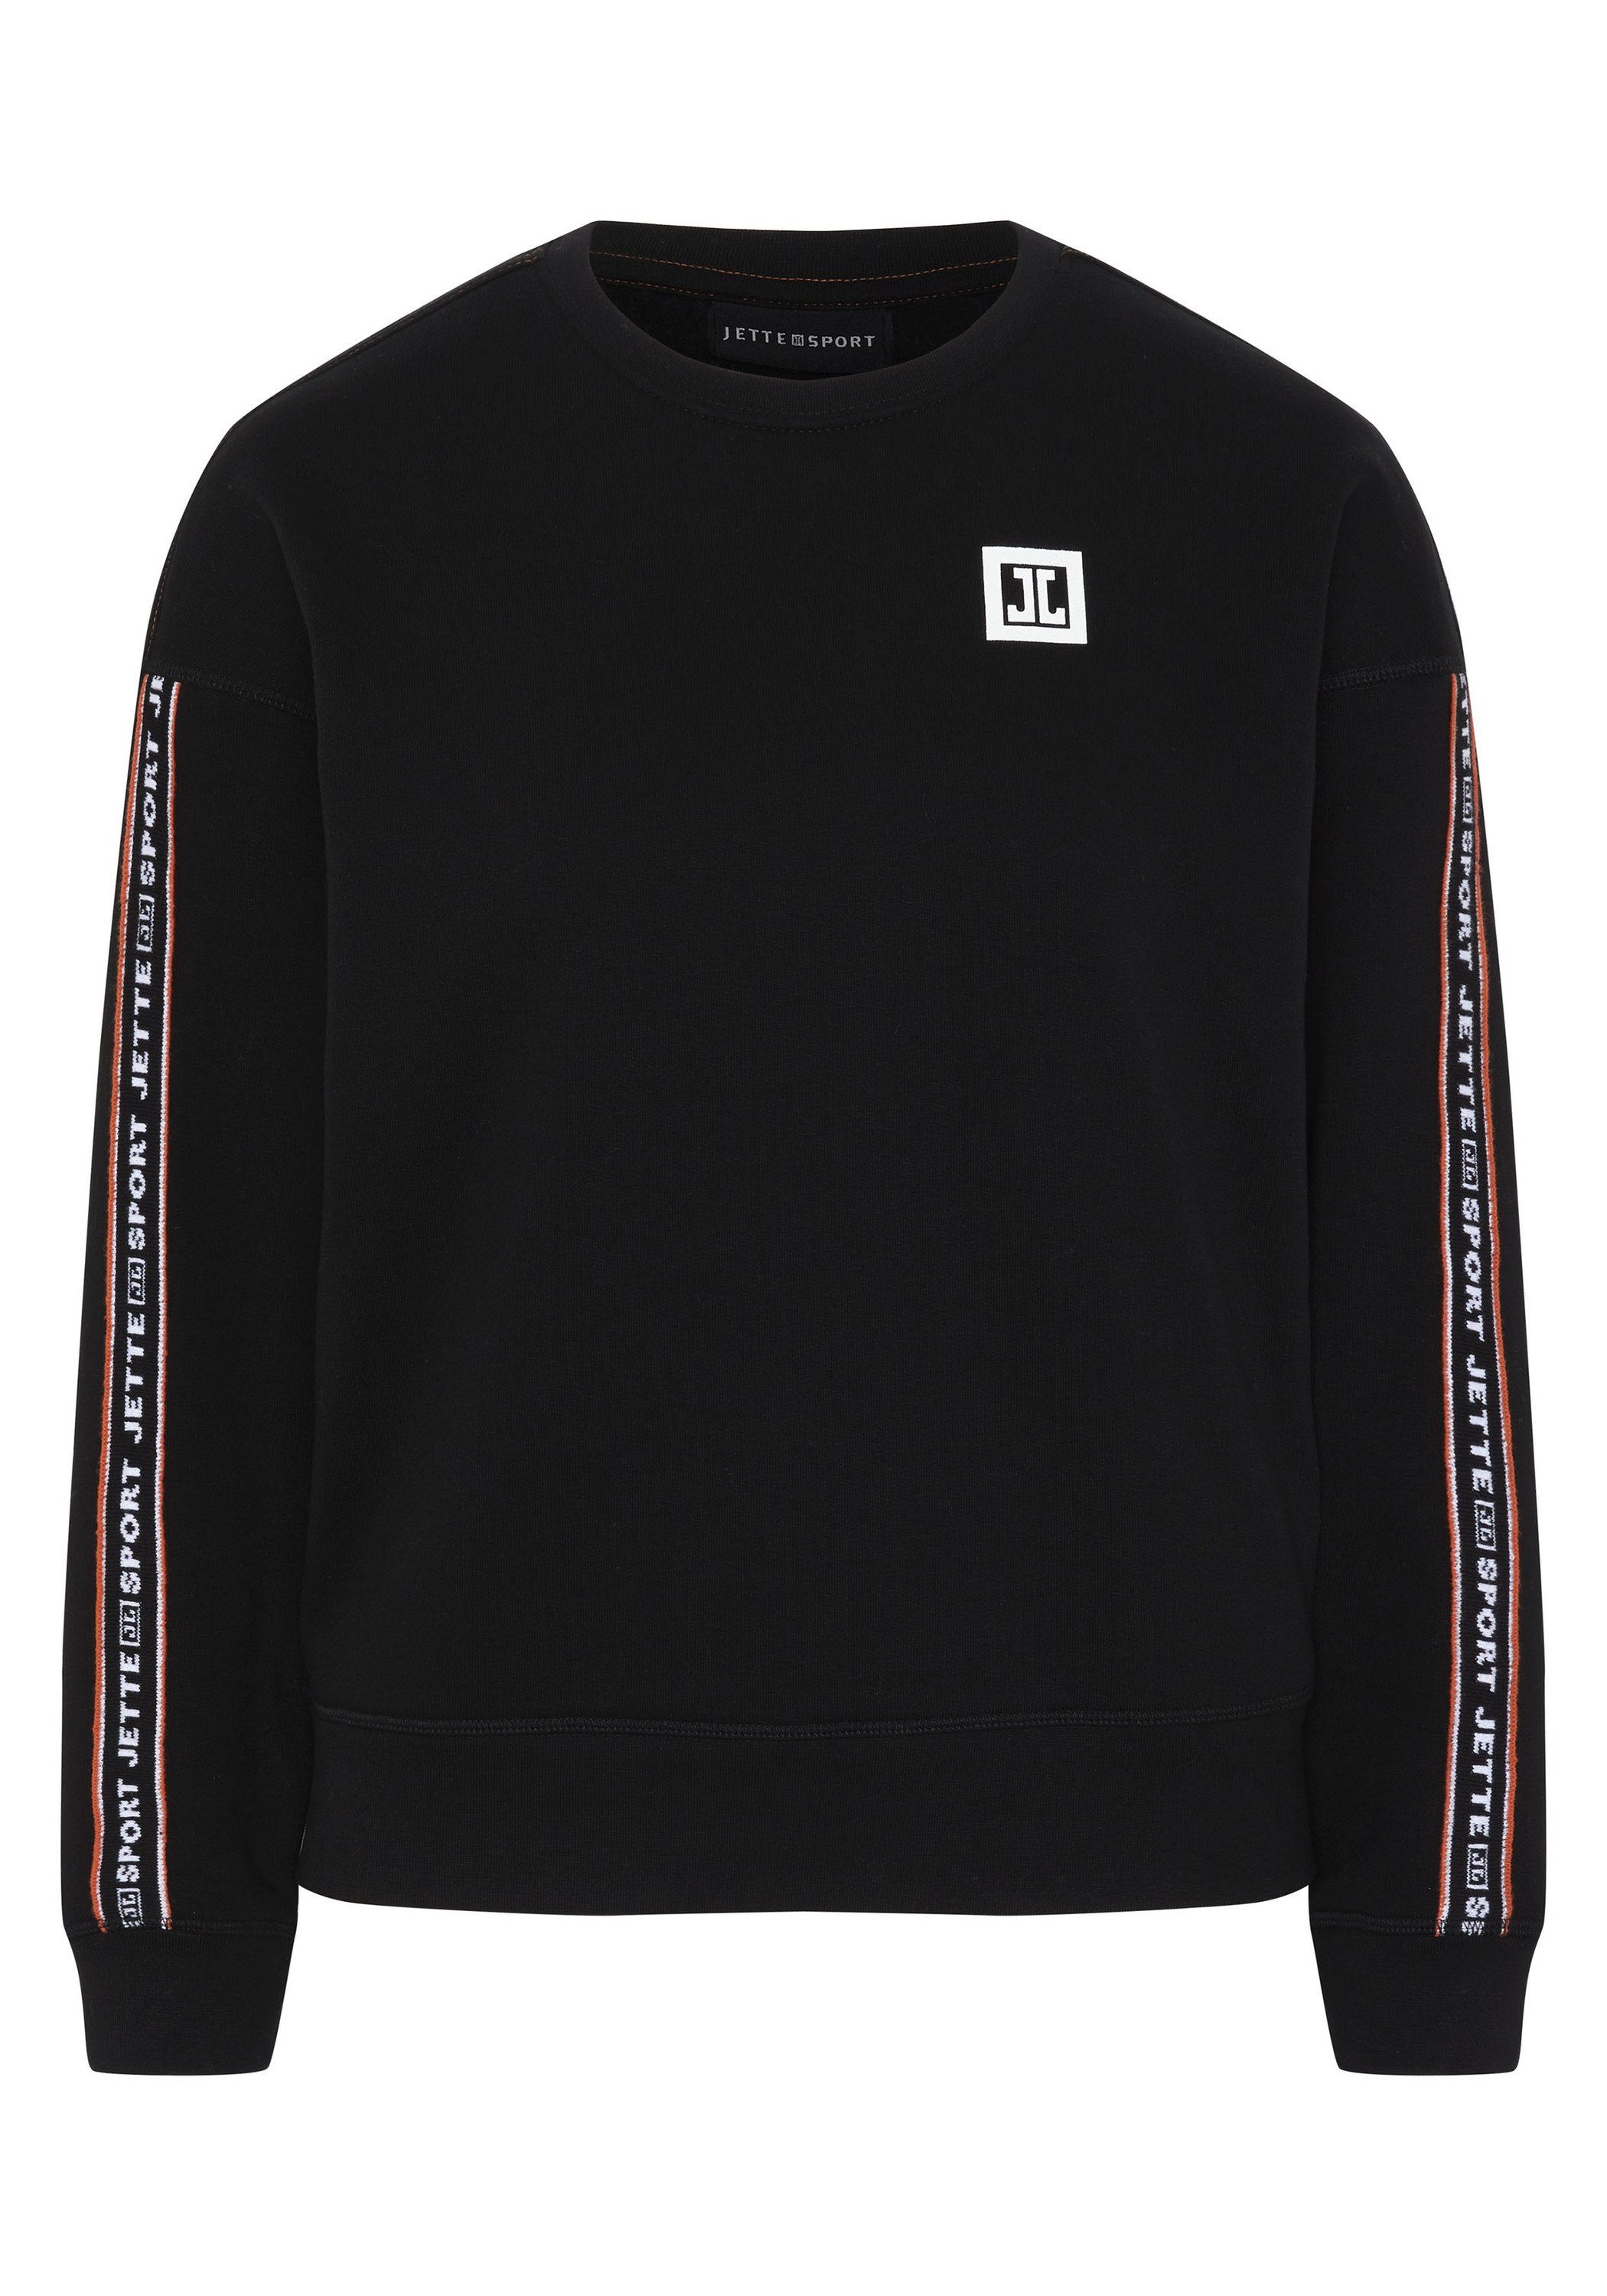 SPORT JETTE Label-Design Black Sweatshirt 19-3911 im Deep